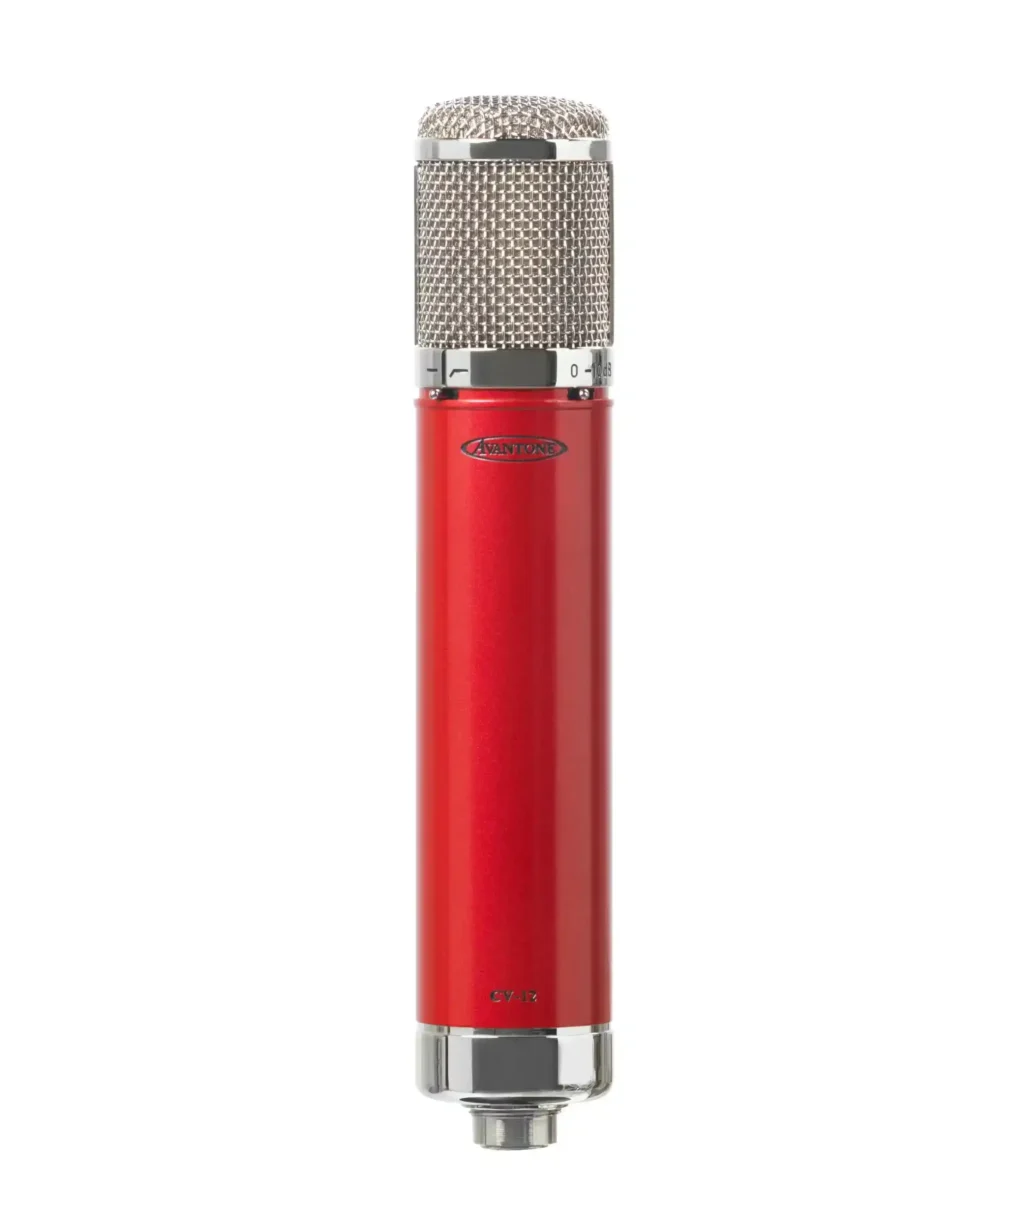 Avantone Cv12 Tube Condenser Microphone [1]